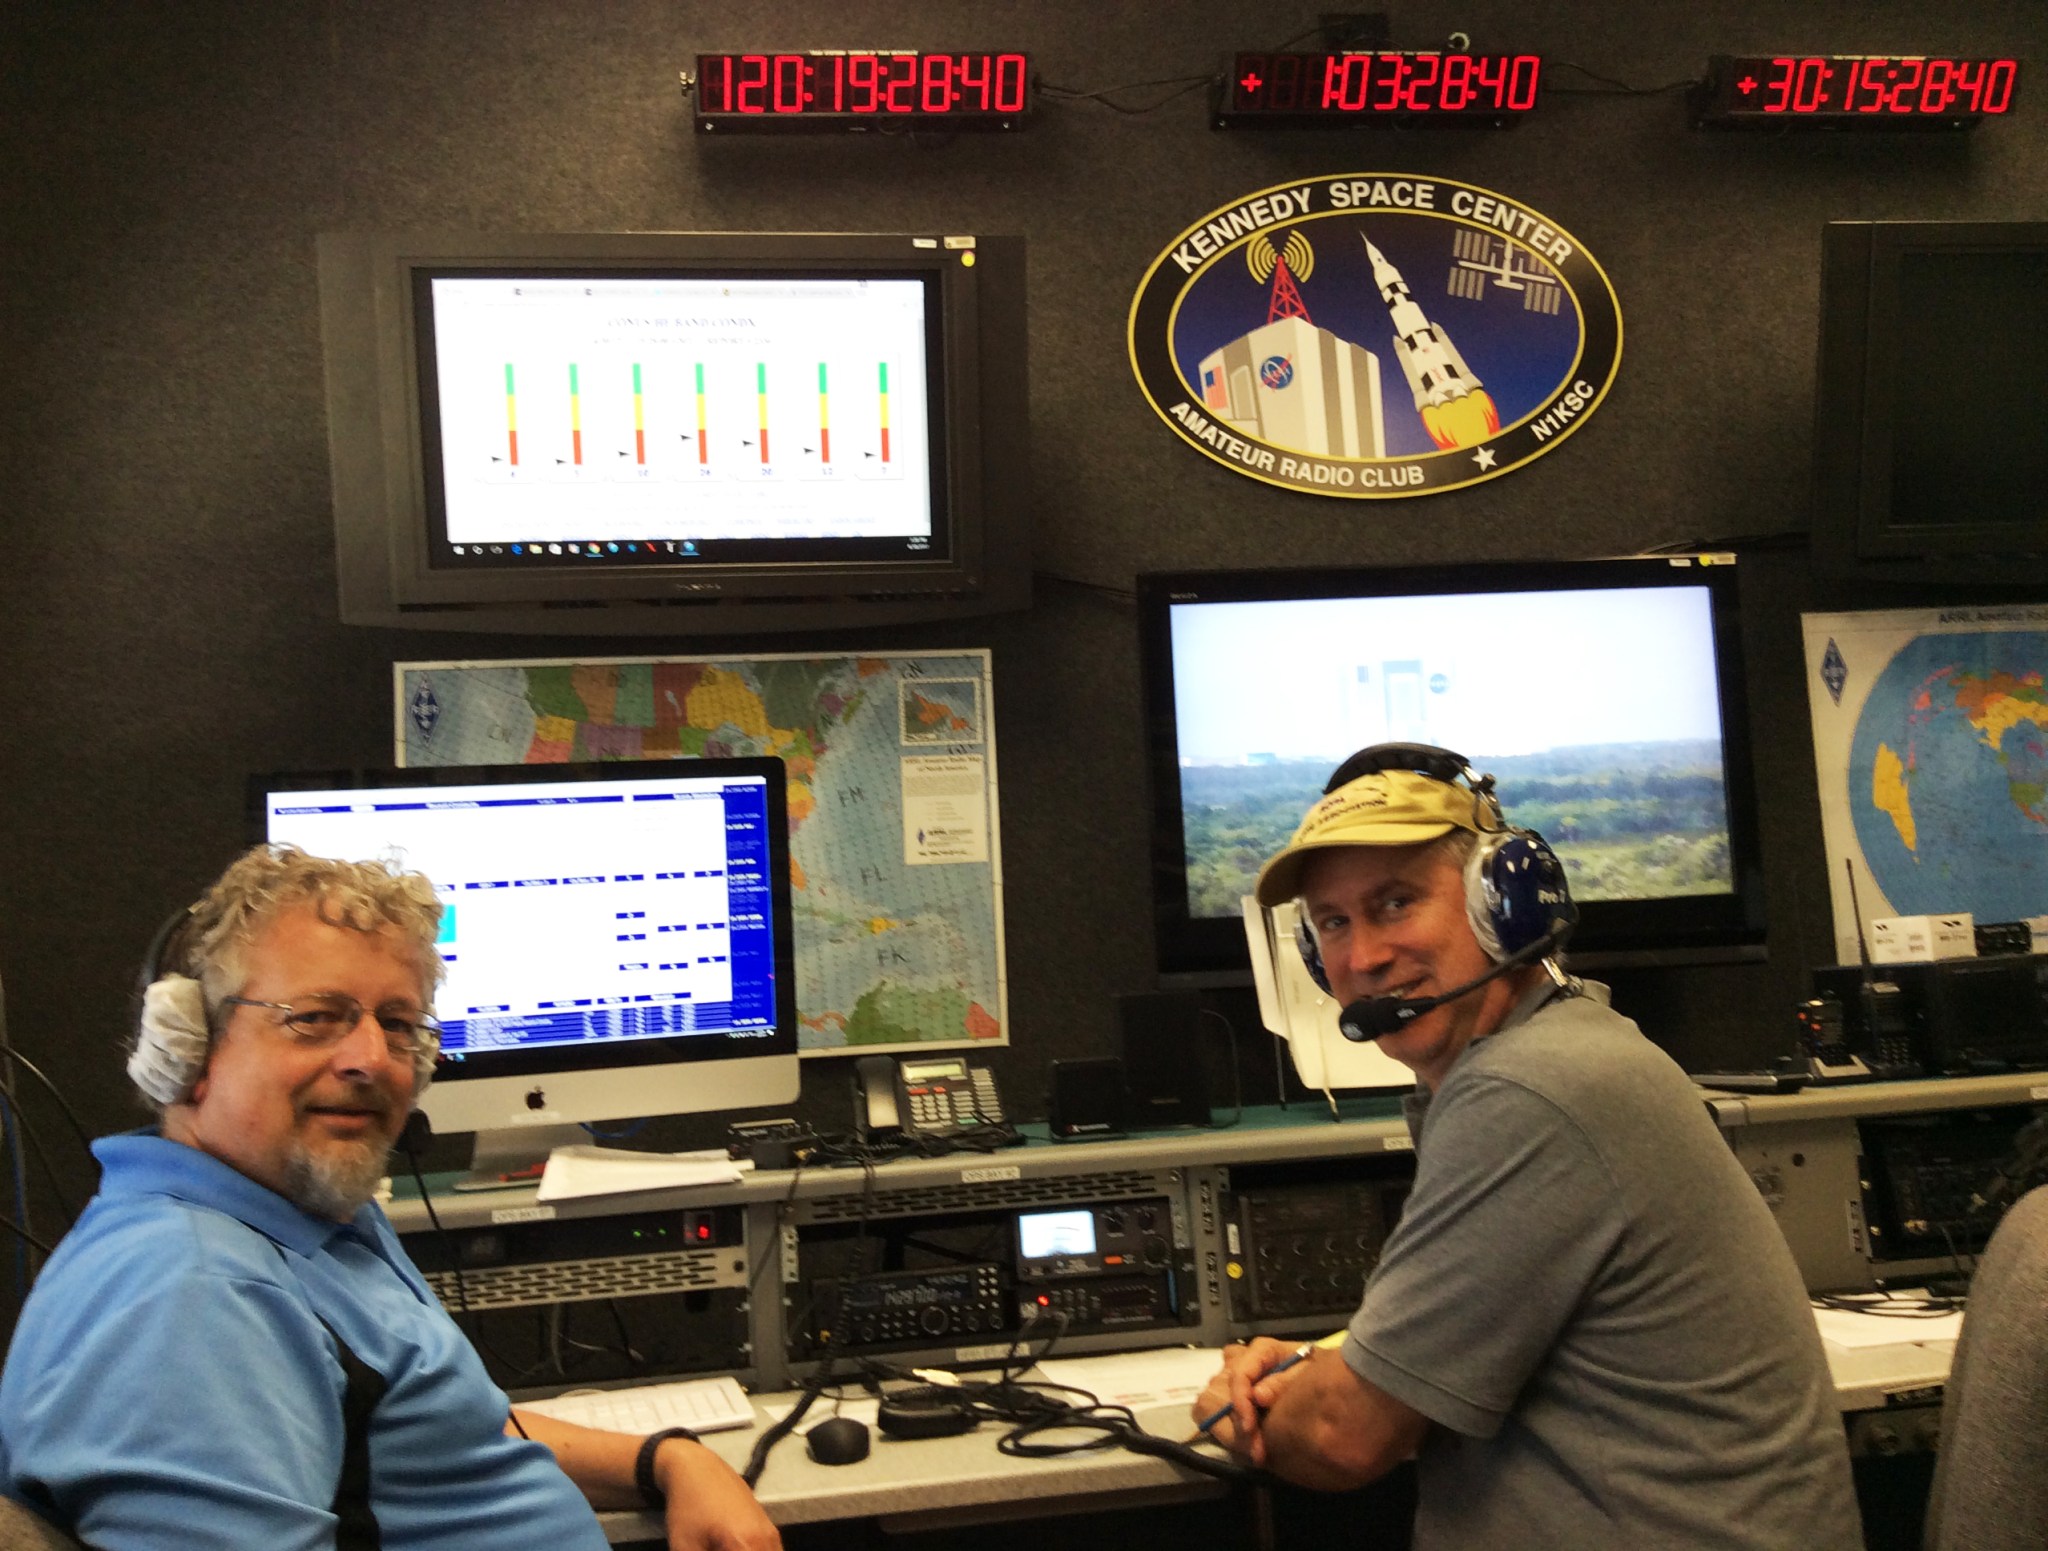 Kennedy Space Center's Amateur Radio Club